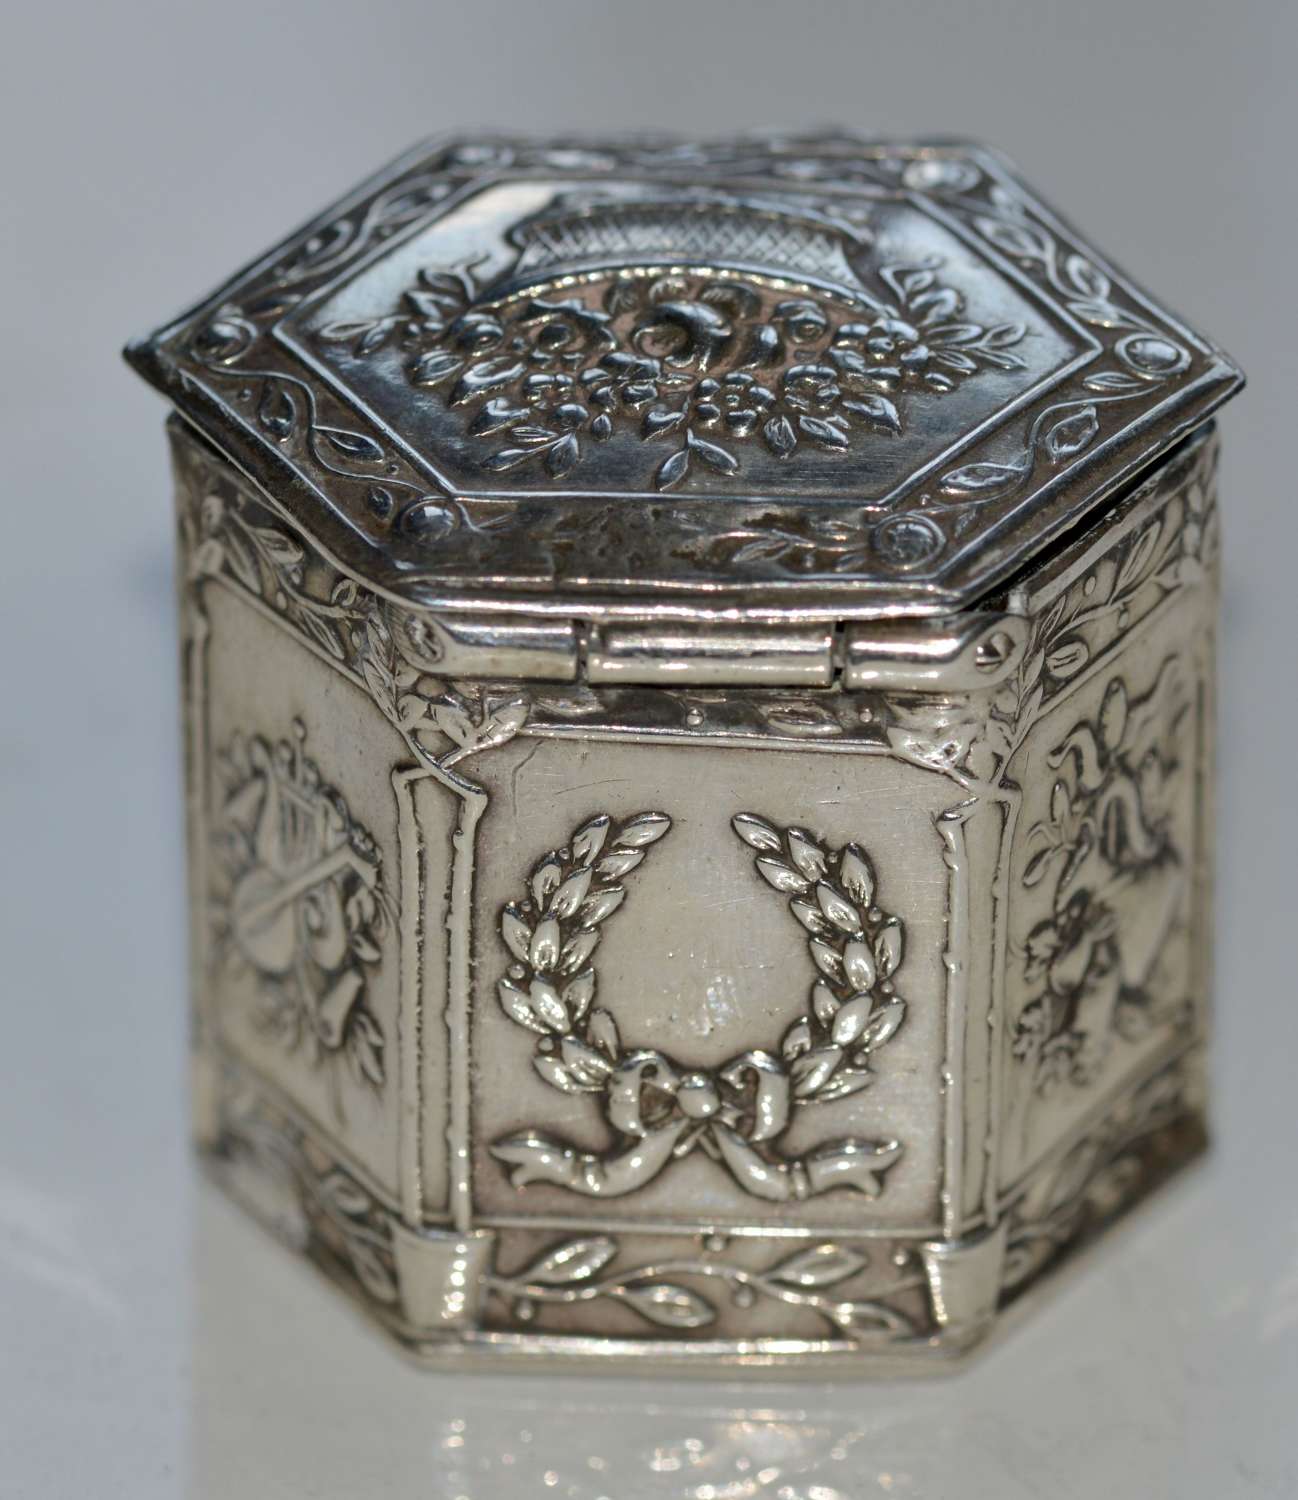 1906 Solid Silver Pill Box - Art Nouveau by Edwin Thomas Bryant